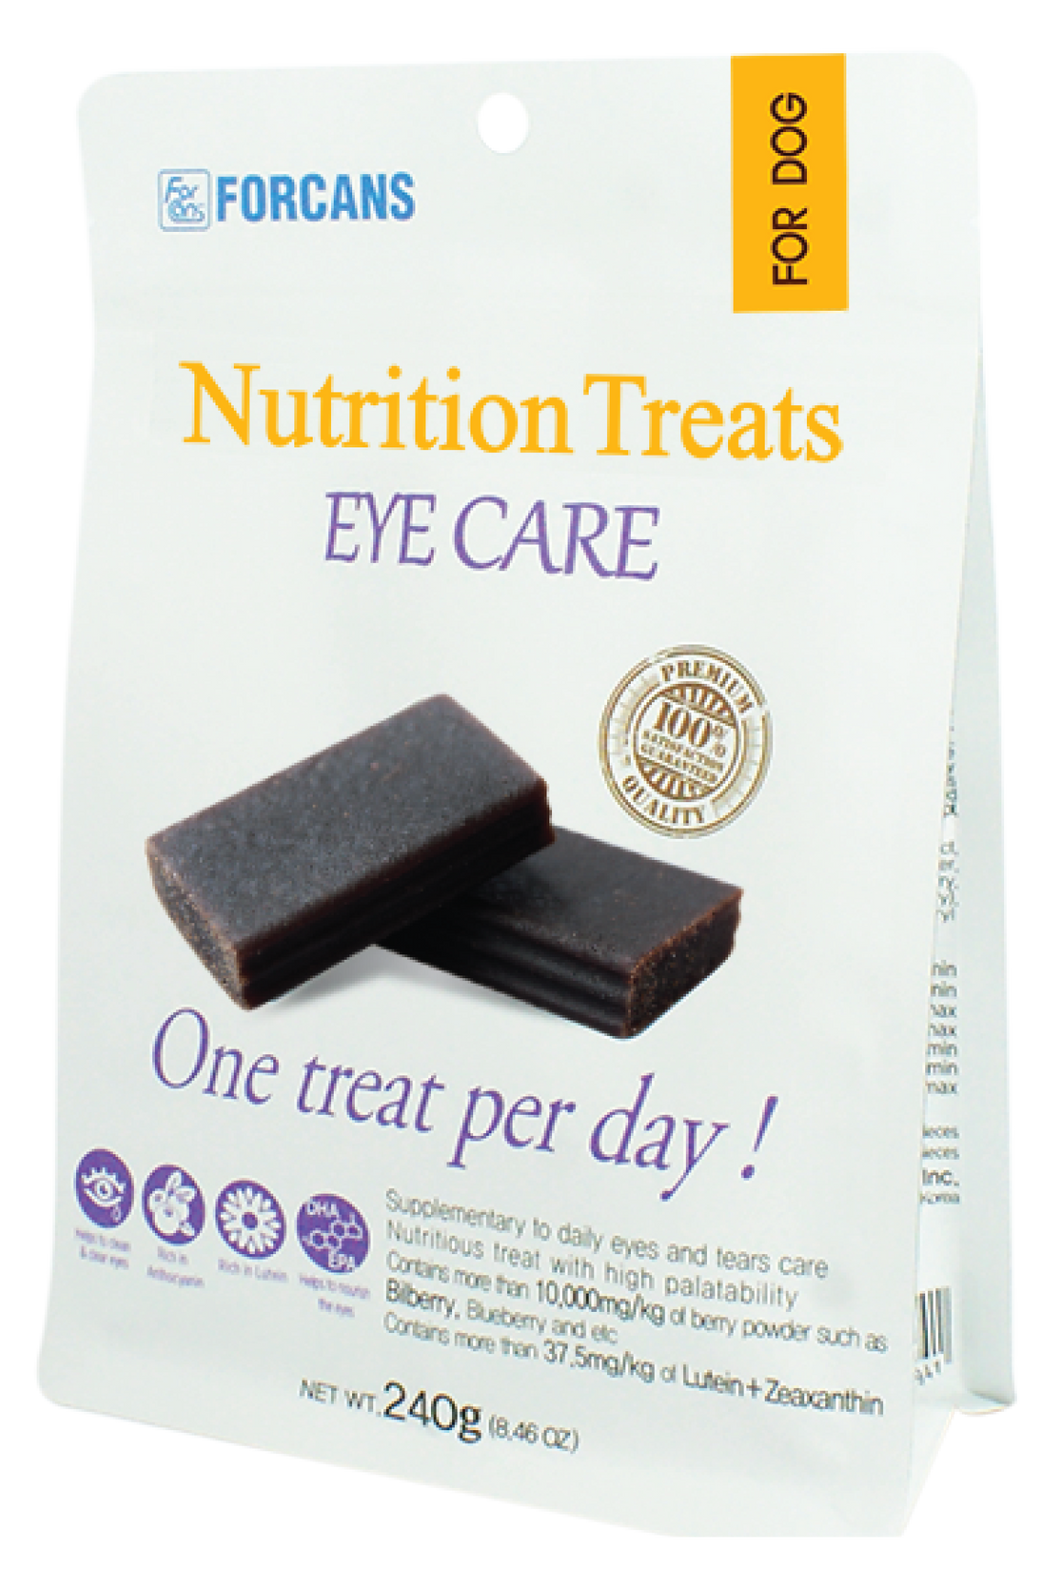 Forcans Nutrition Treats - Eye Care